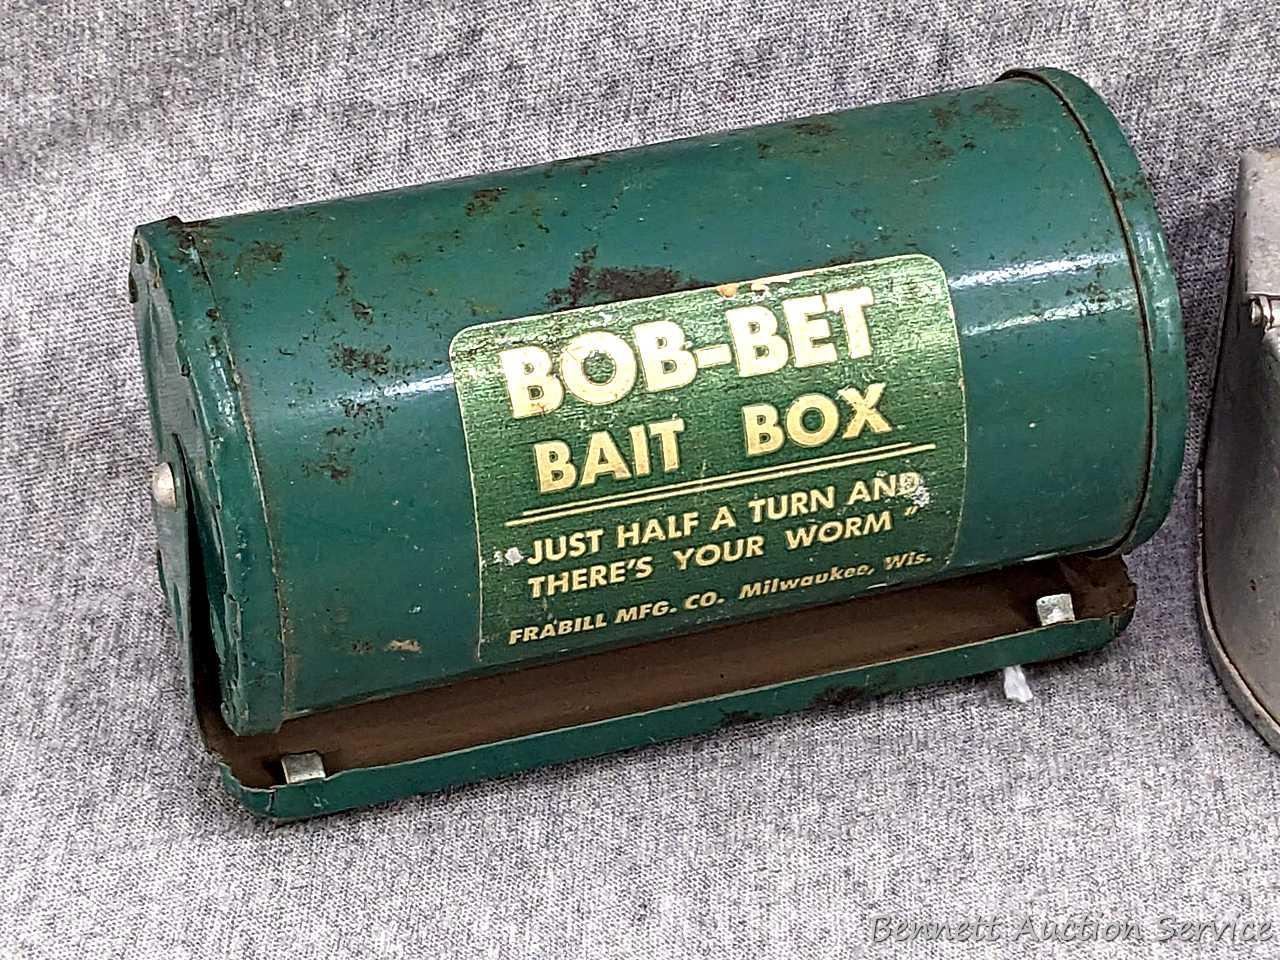 Vintage Metal Pocket Tackle Box & Bob-bet Worms Bait Box / Vintage